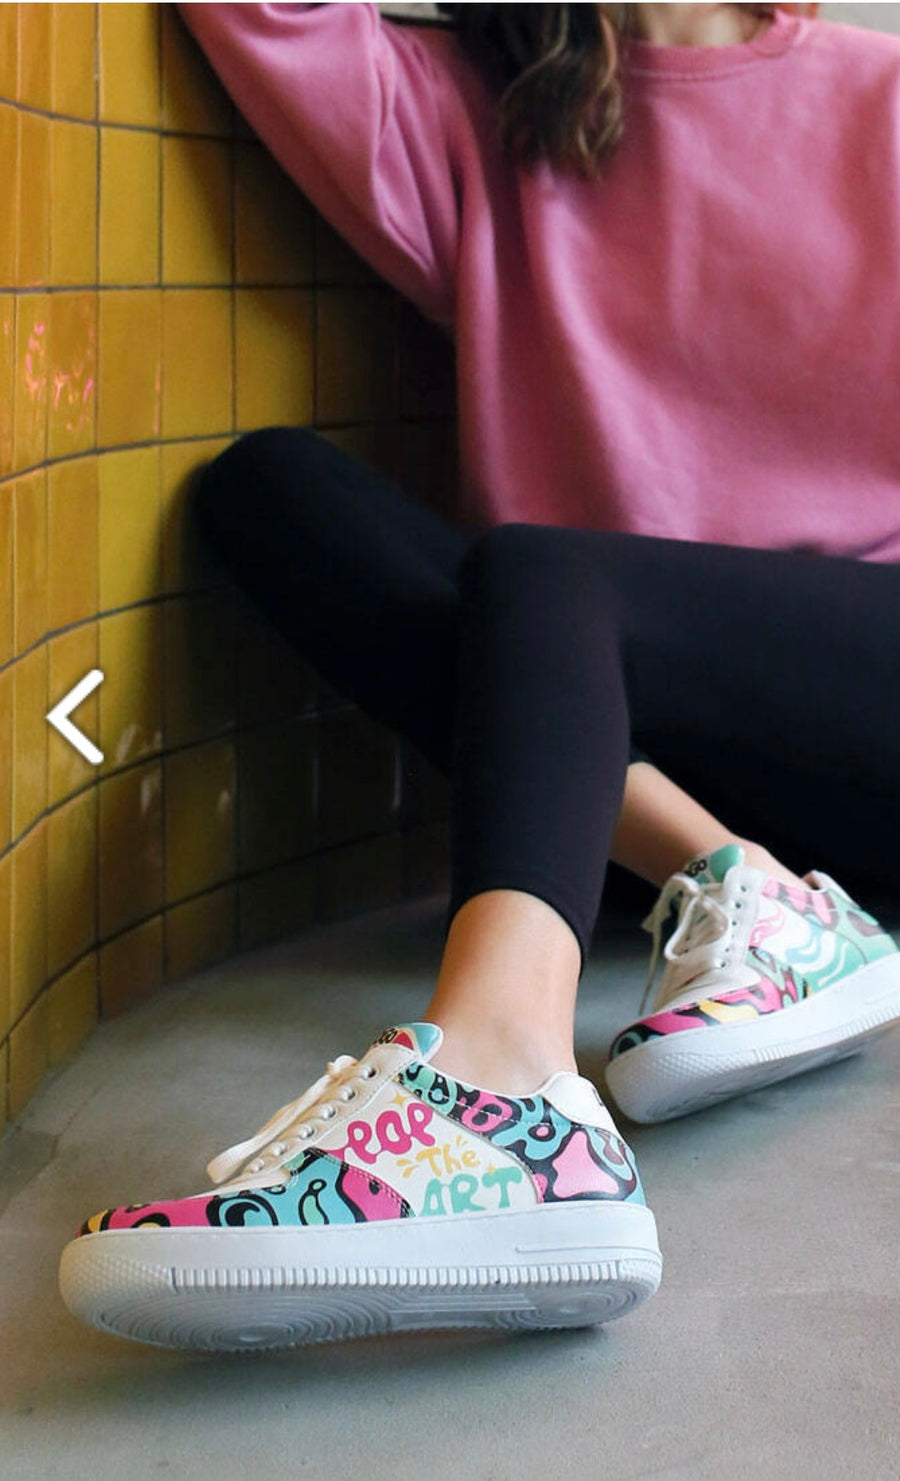 Pop the Art | Dice Sneakers Women's Shoes